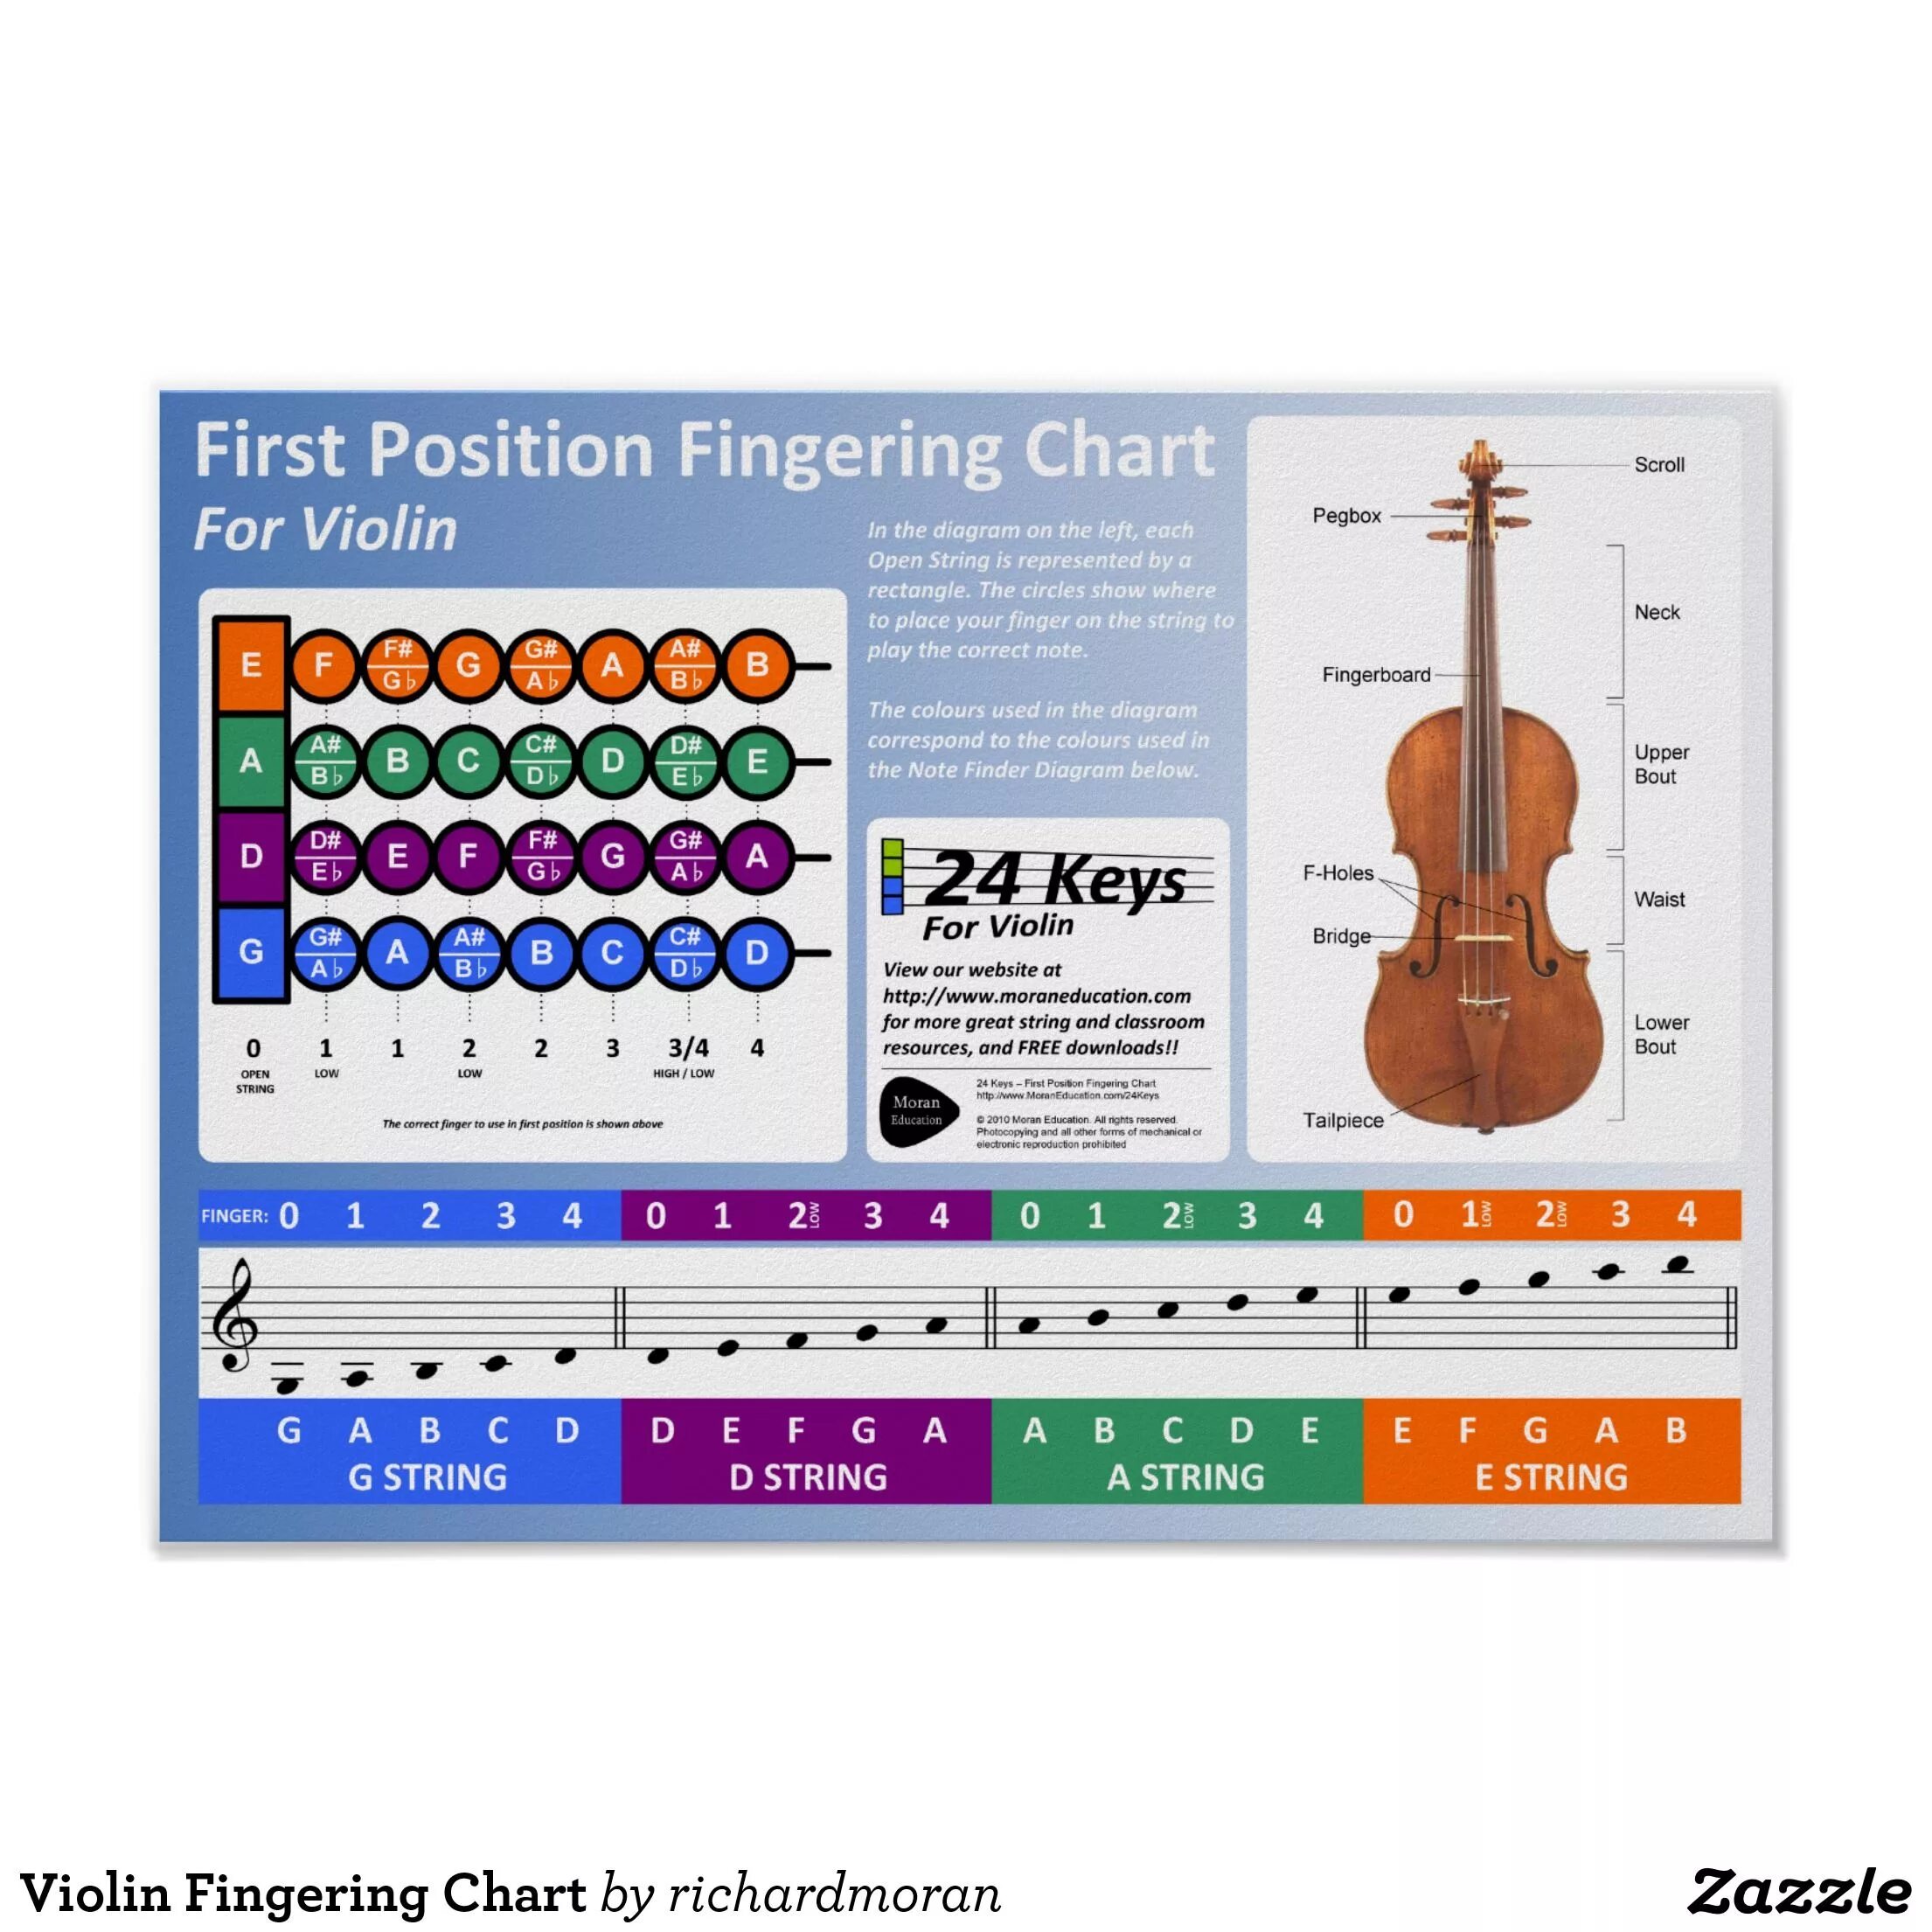 Расположение нот на грифе скрипки. Расположение нот на скрипке 4/4. Расположение нот на грифе скрипки для начинающих. Ноты на скрипке для начинающих расположение. Где ноты скрипки